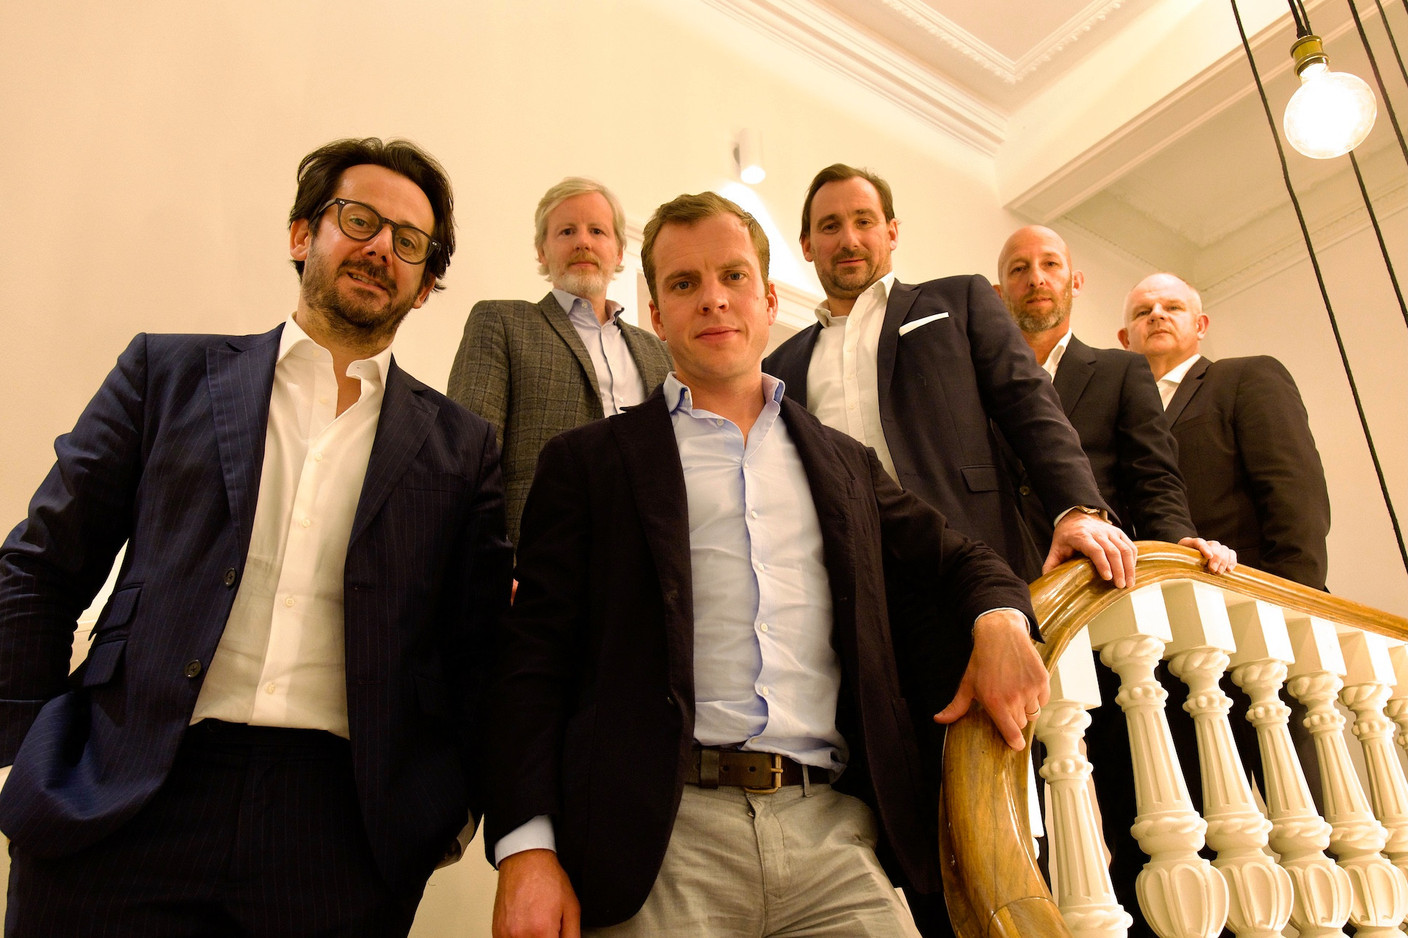 From left to right: Damien Chasseur, Baptiste Hugon, Nicolas Lhoist, Patrick Sermaize, Arnaud Leballeur and Pierre Thomas. B17